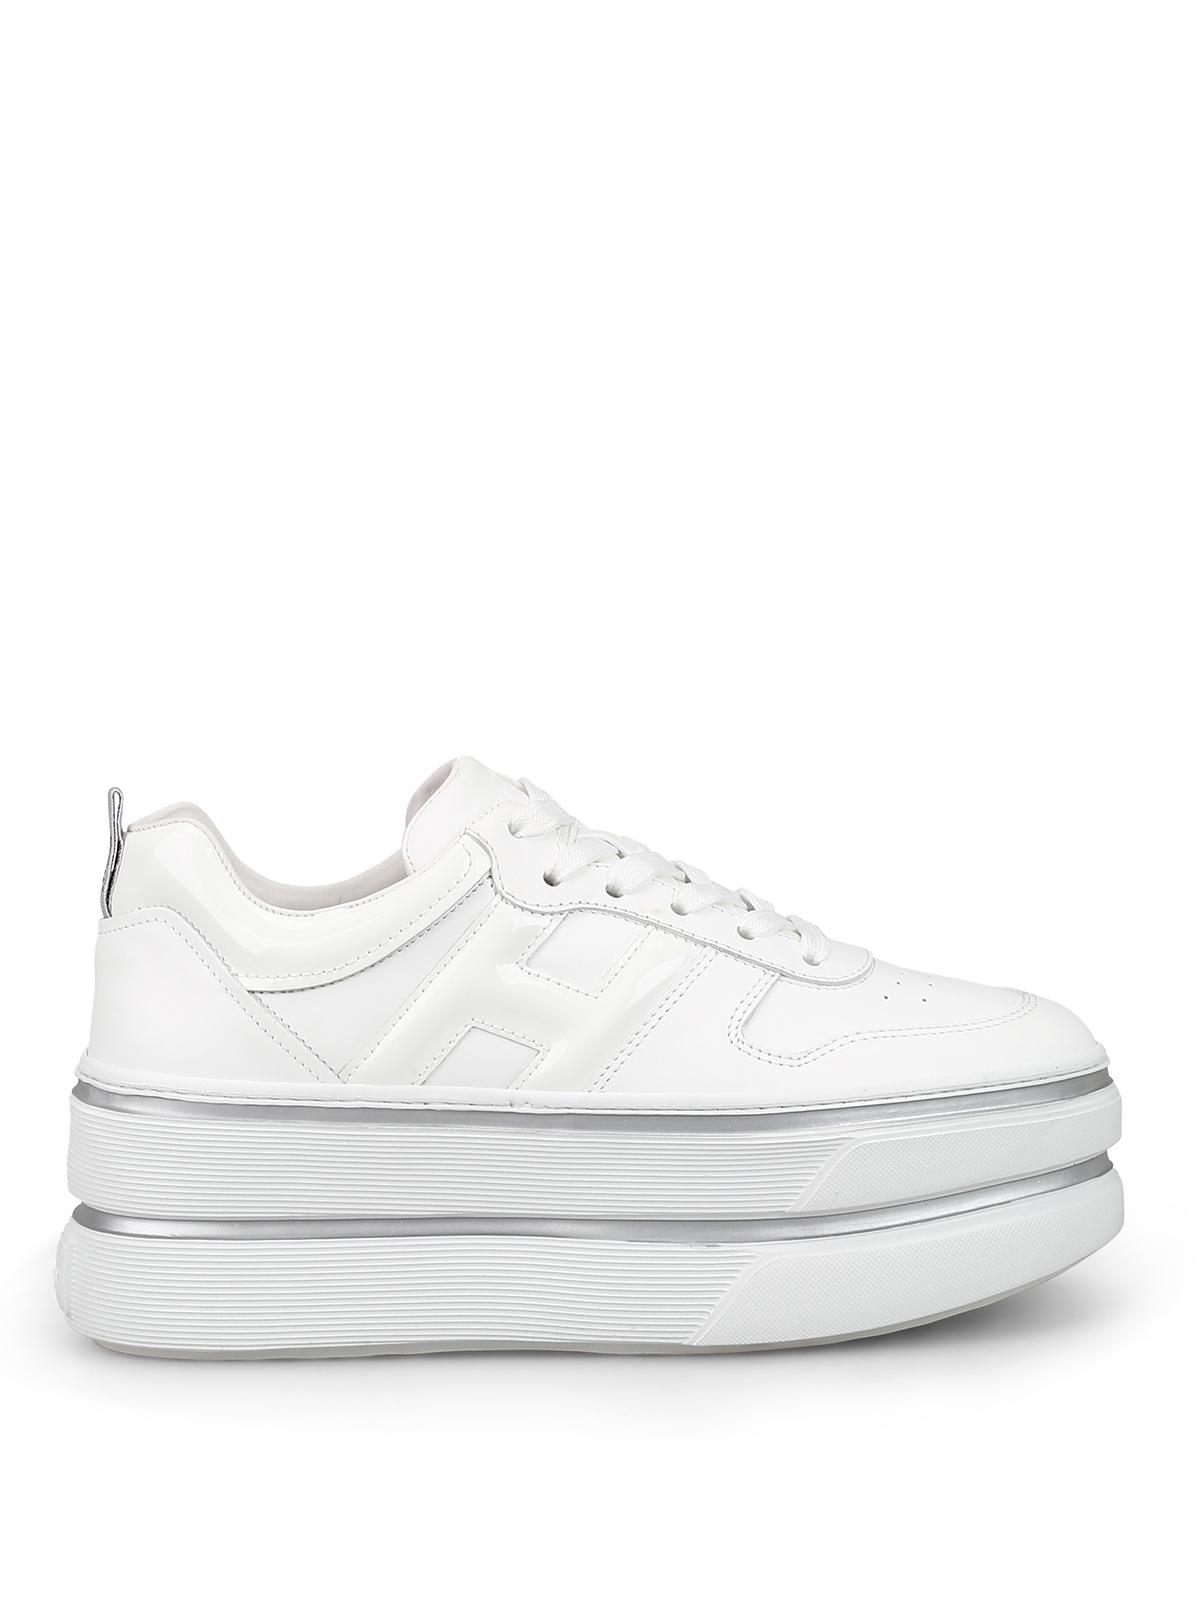 Hogan Leather White Platform Sneakers - Lyst